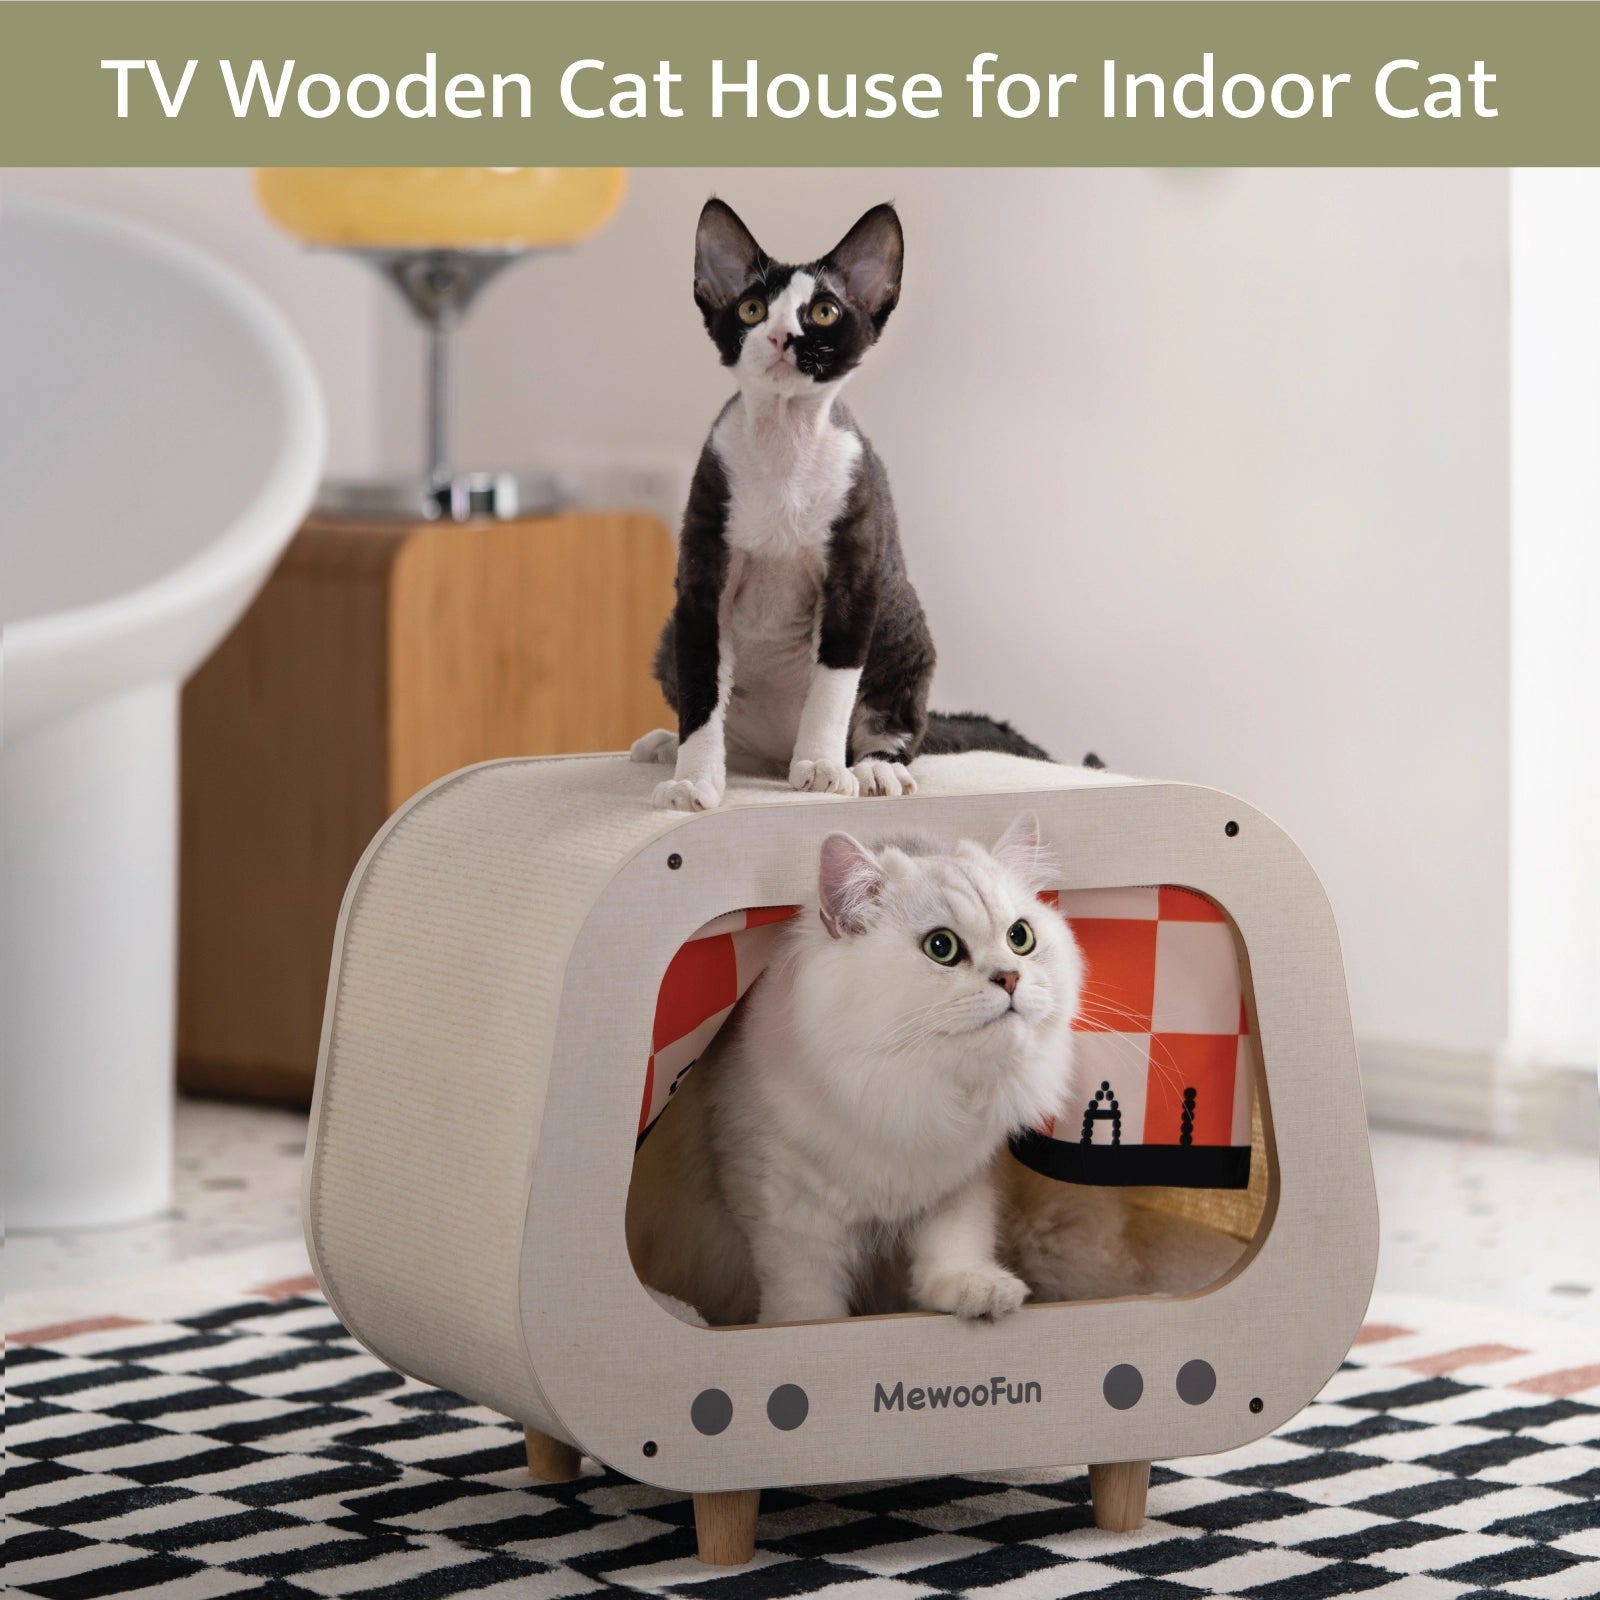 MEWOOFUN Wooden TV Cat Play House - Pets Villa